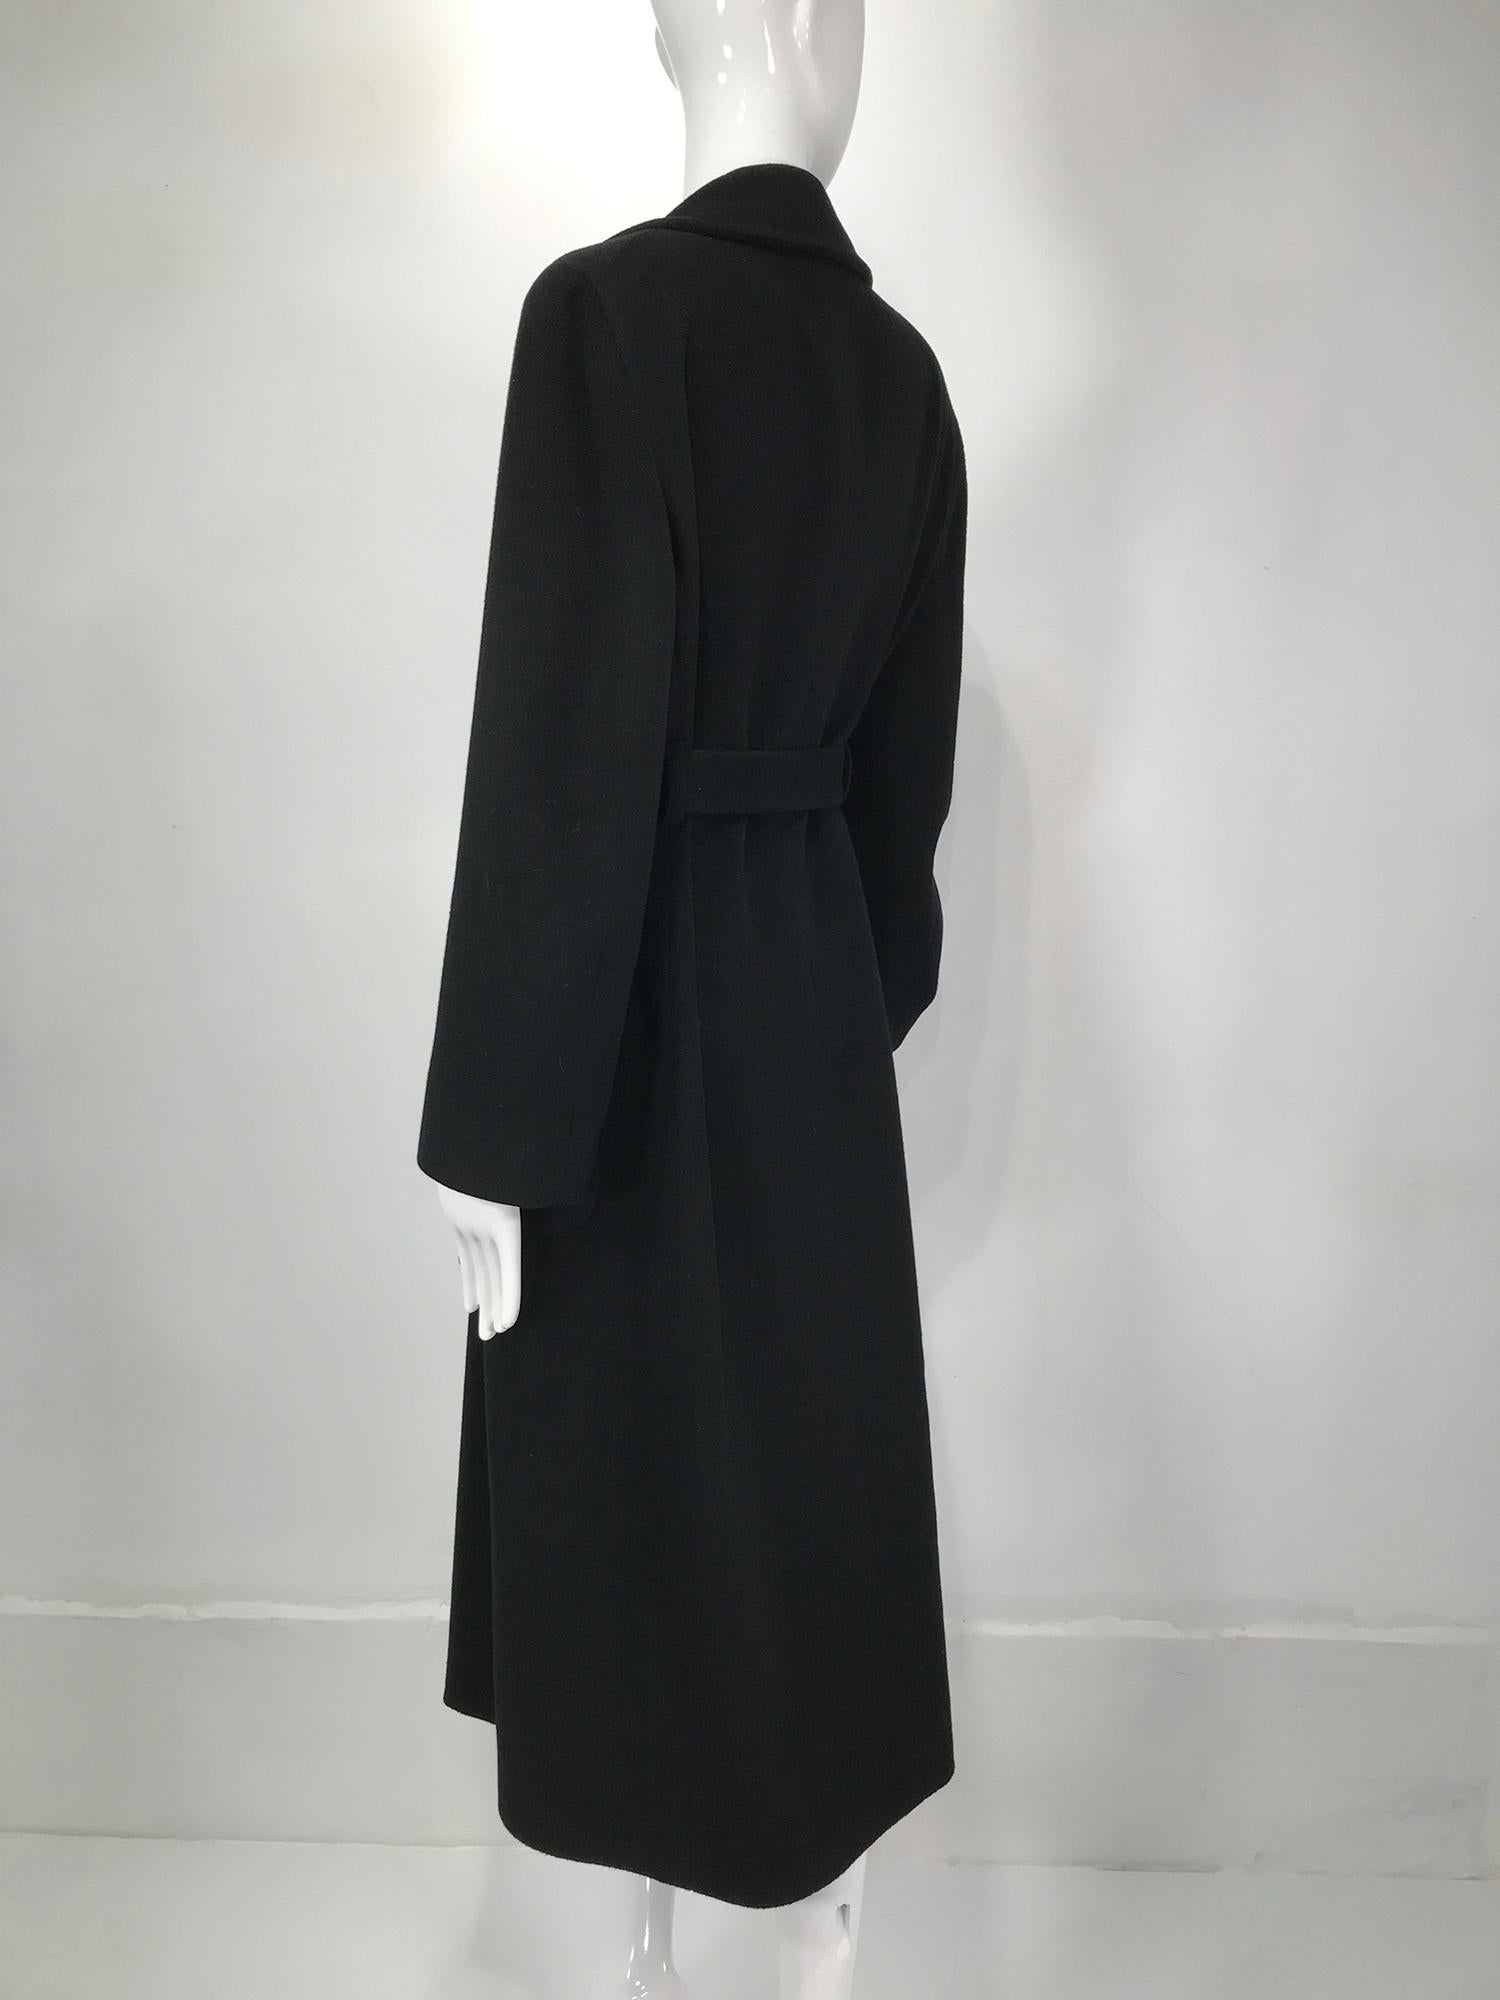 Donna Karan Black Cashmere Wrap Coat 10 1